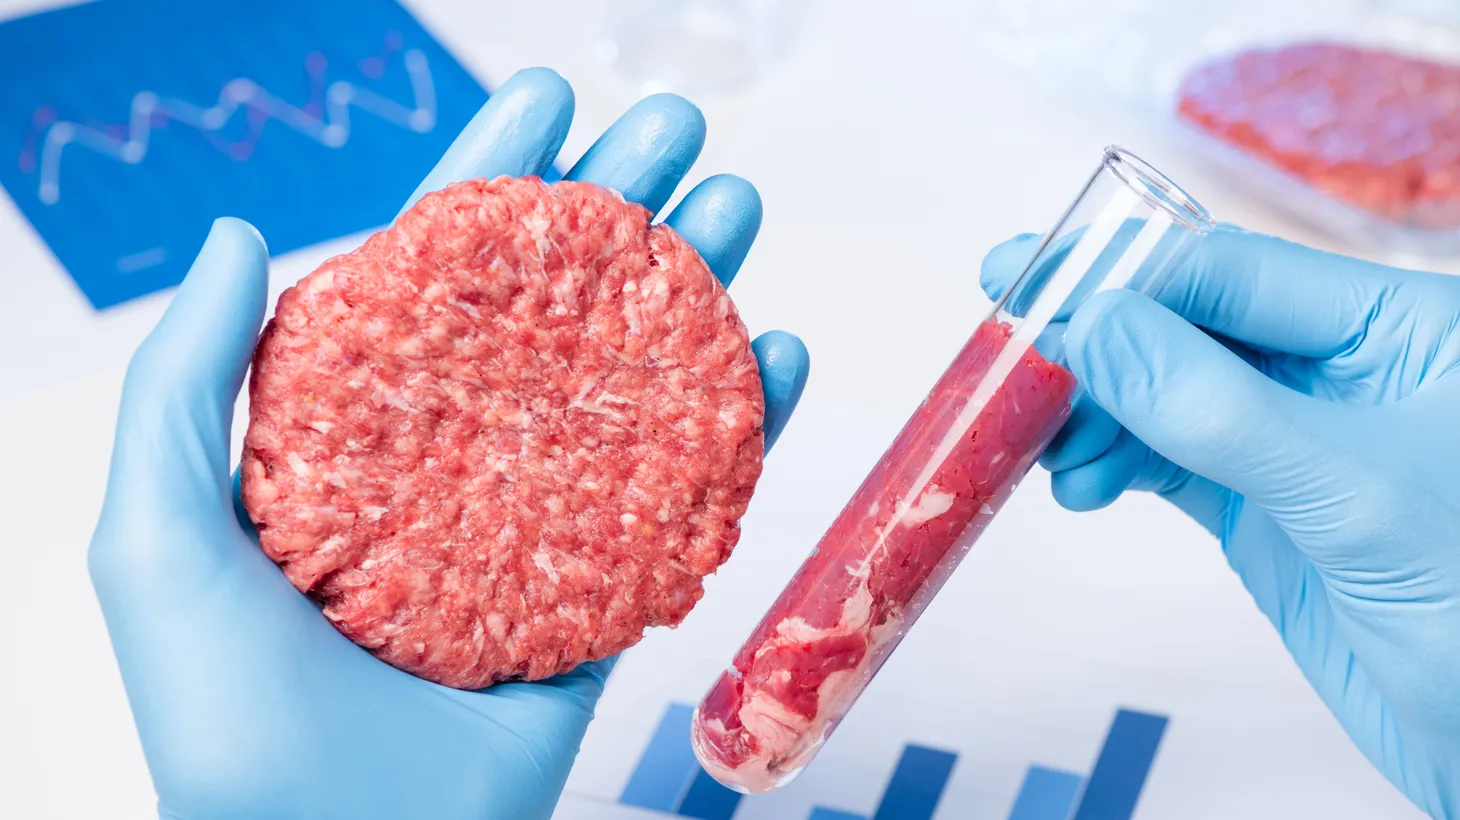 Fake meat coming to a hamburger bun near you soon - Smart Lifebites